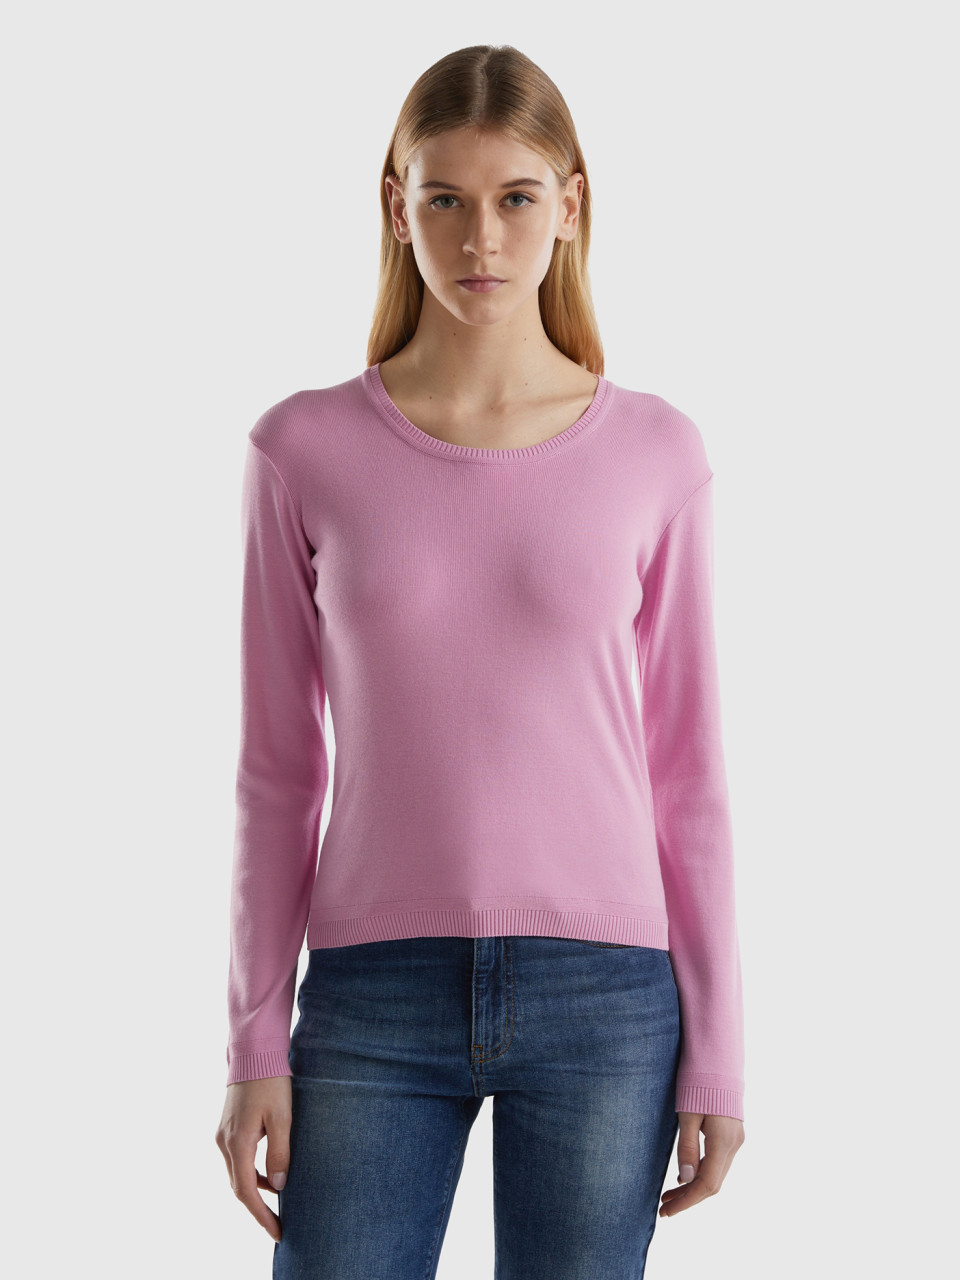 Benetton, Crew Neck Sweater In Pure Cotton, Pastel Pink, Women